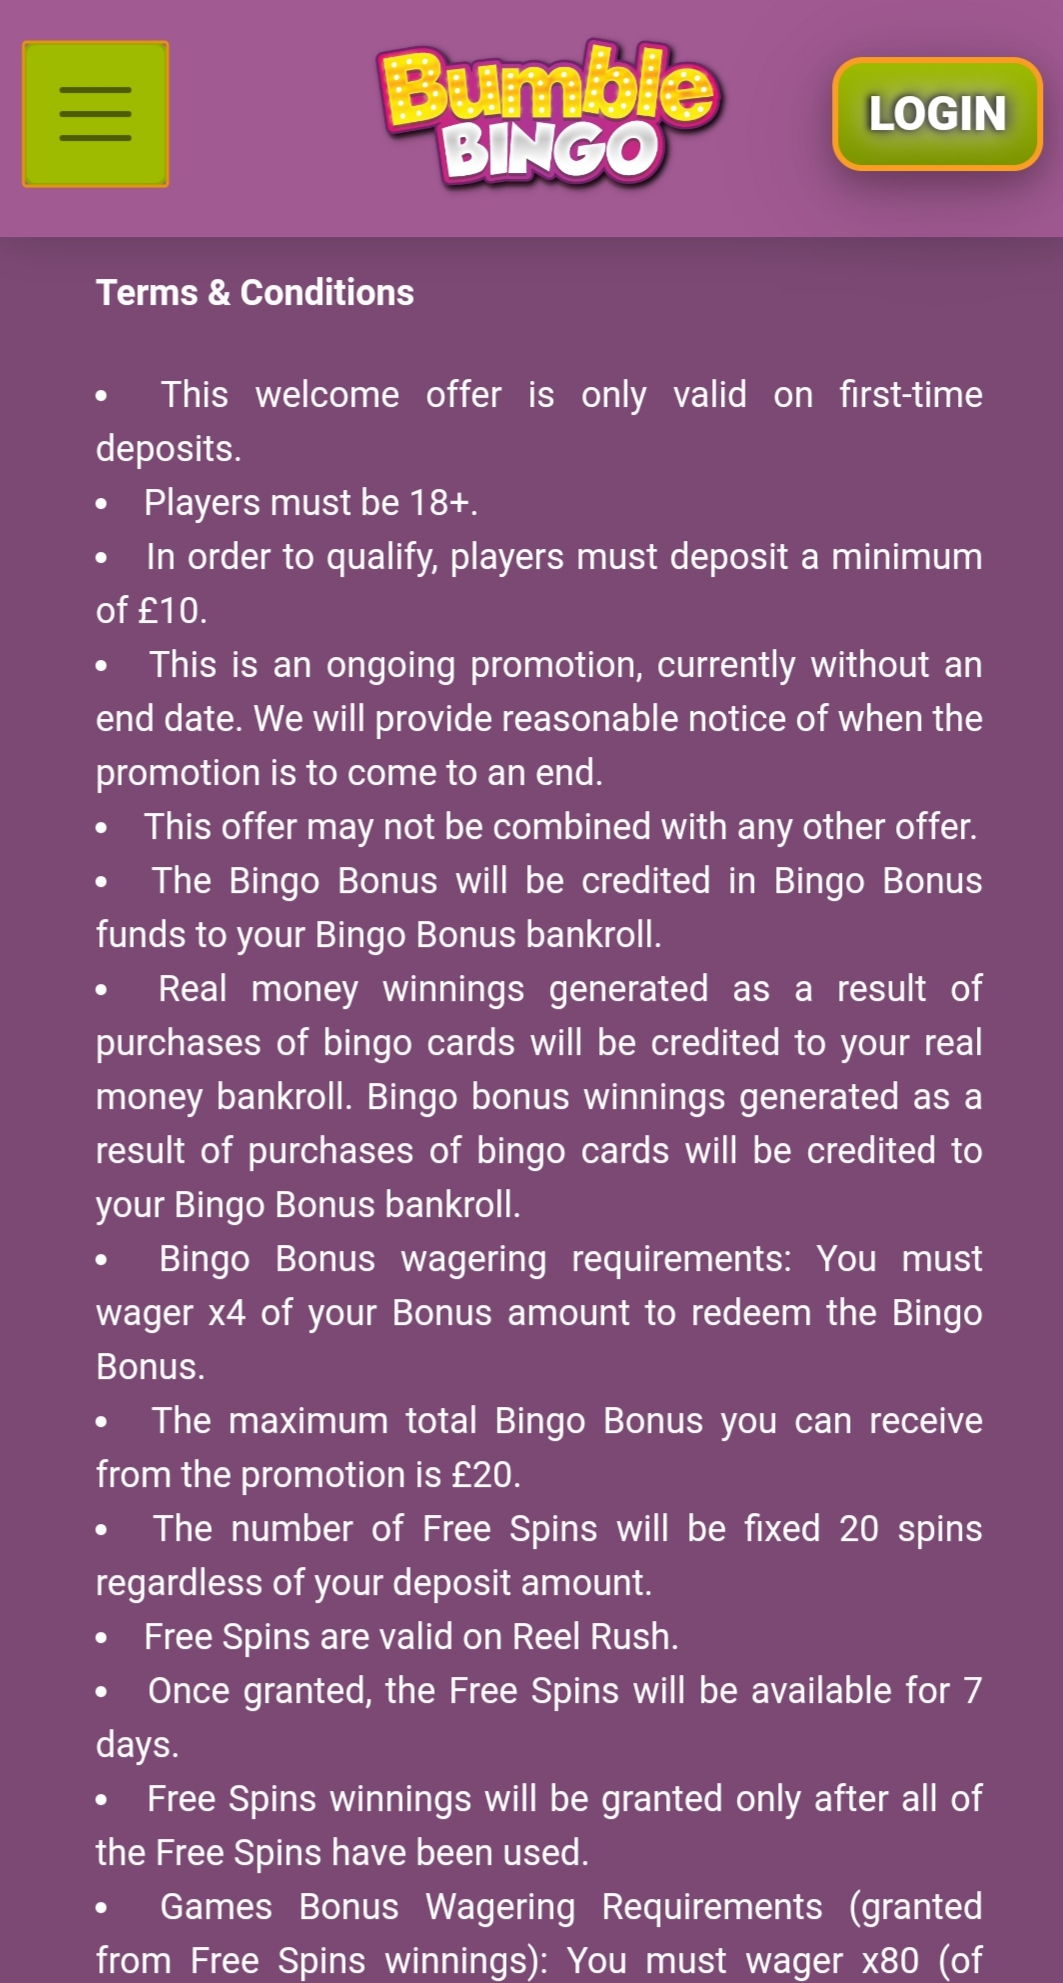 Bumble Bingo Casino Mobile No Deposit Bonus Review